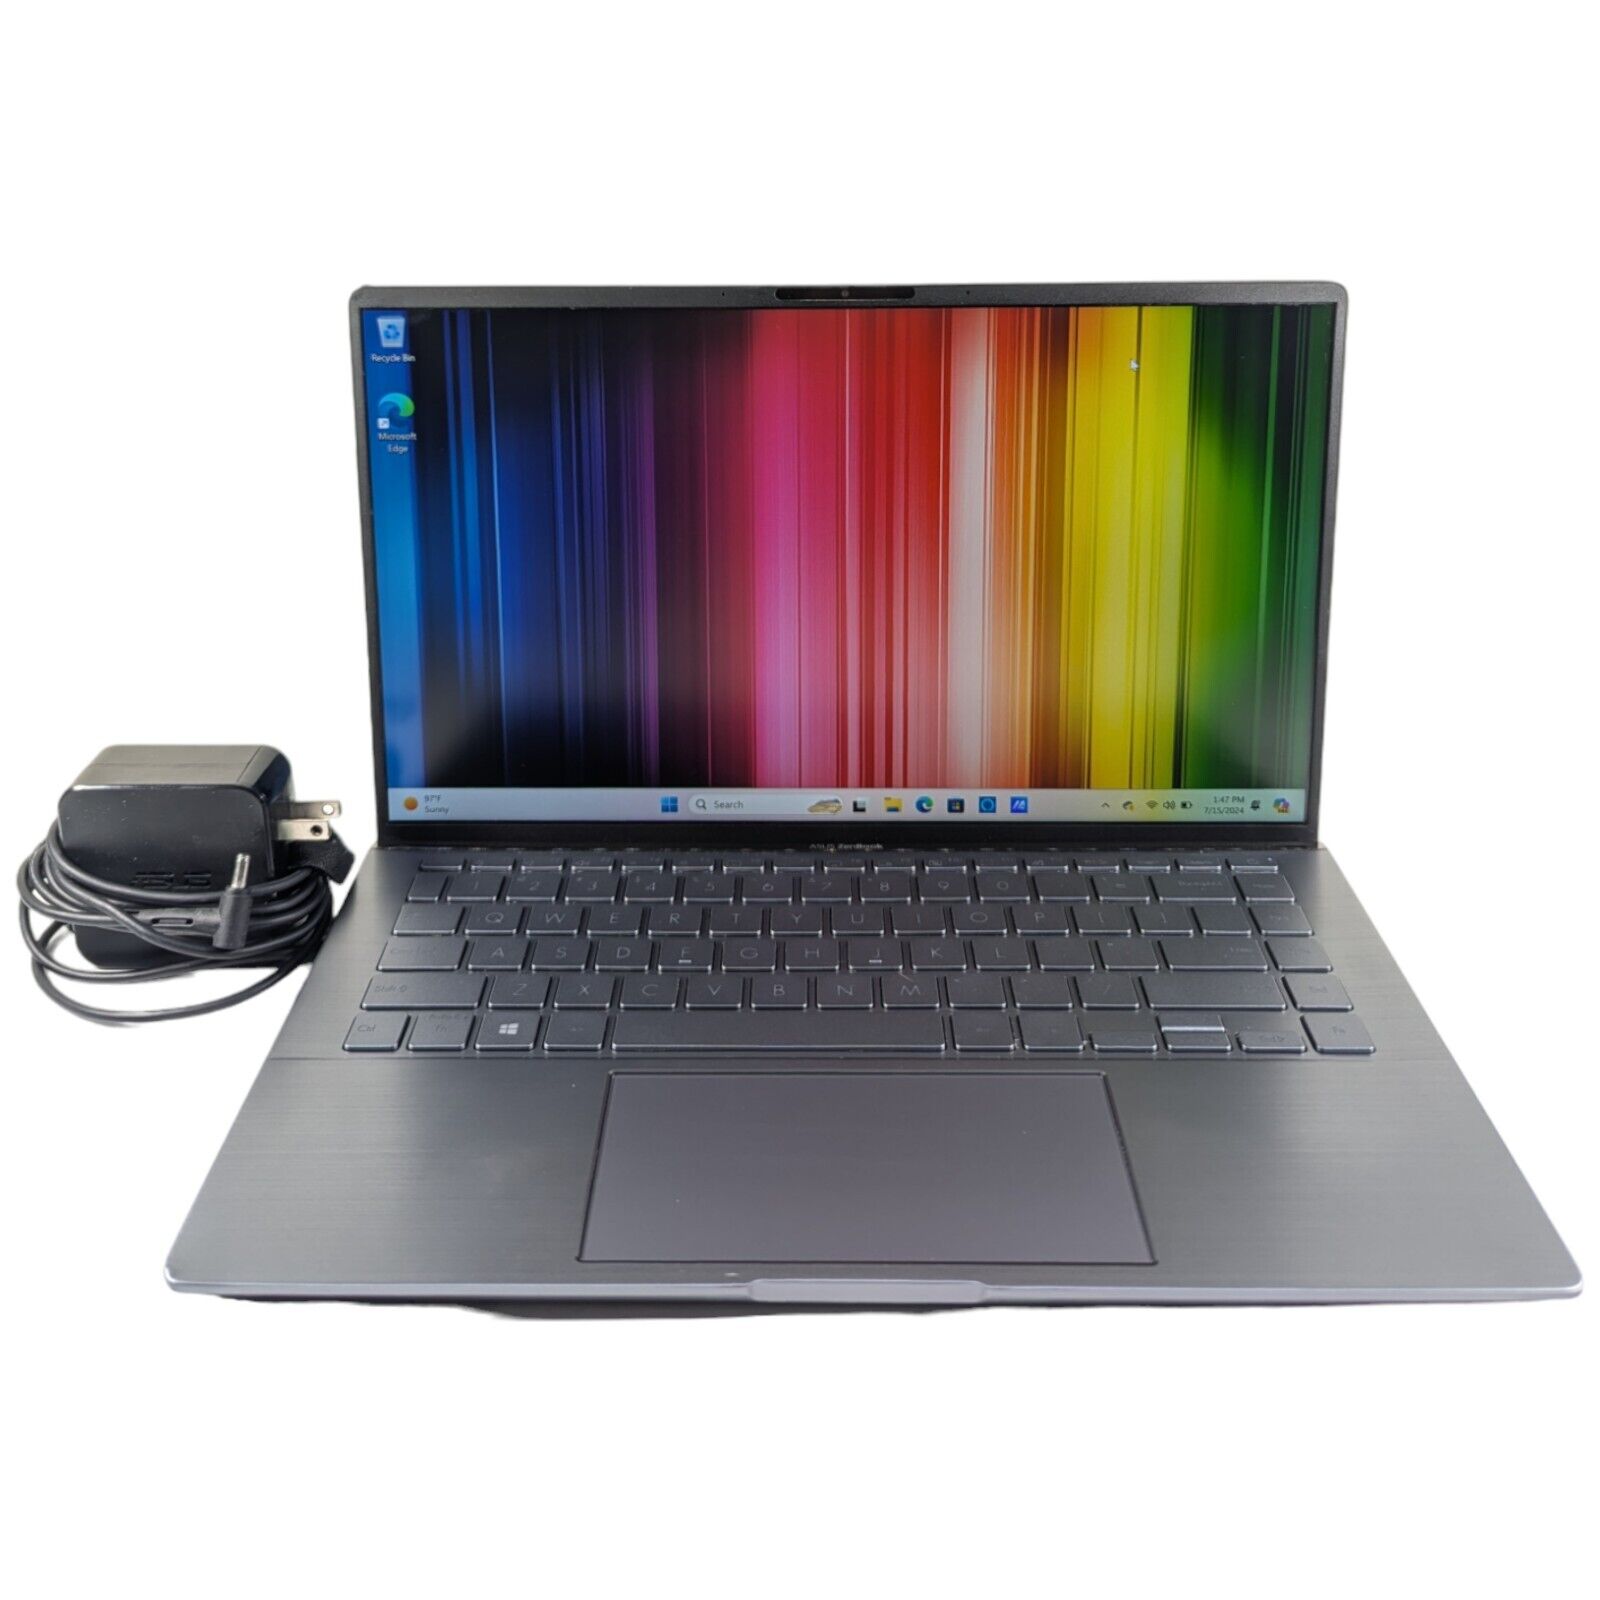 Asus Zenbook 14 Laptop AMD Ryzen 5 4500U 8GB RAM 256GB SSD NVIDIA MX350 - *READ